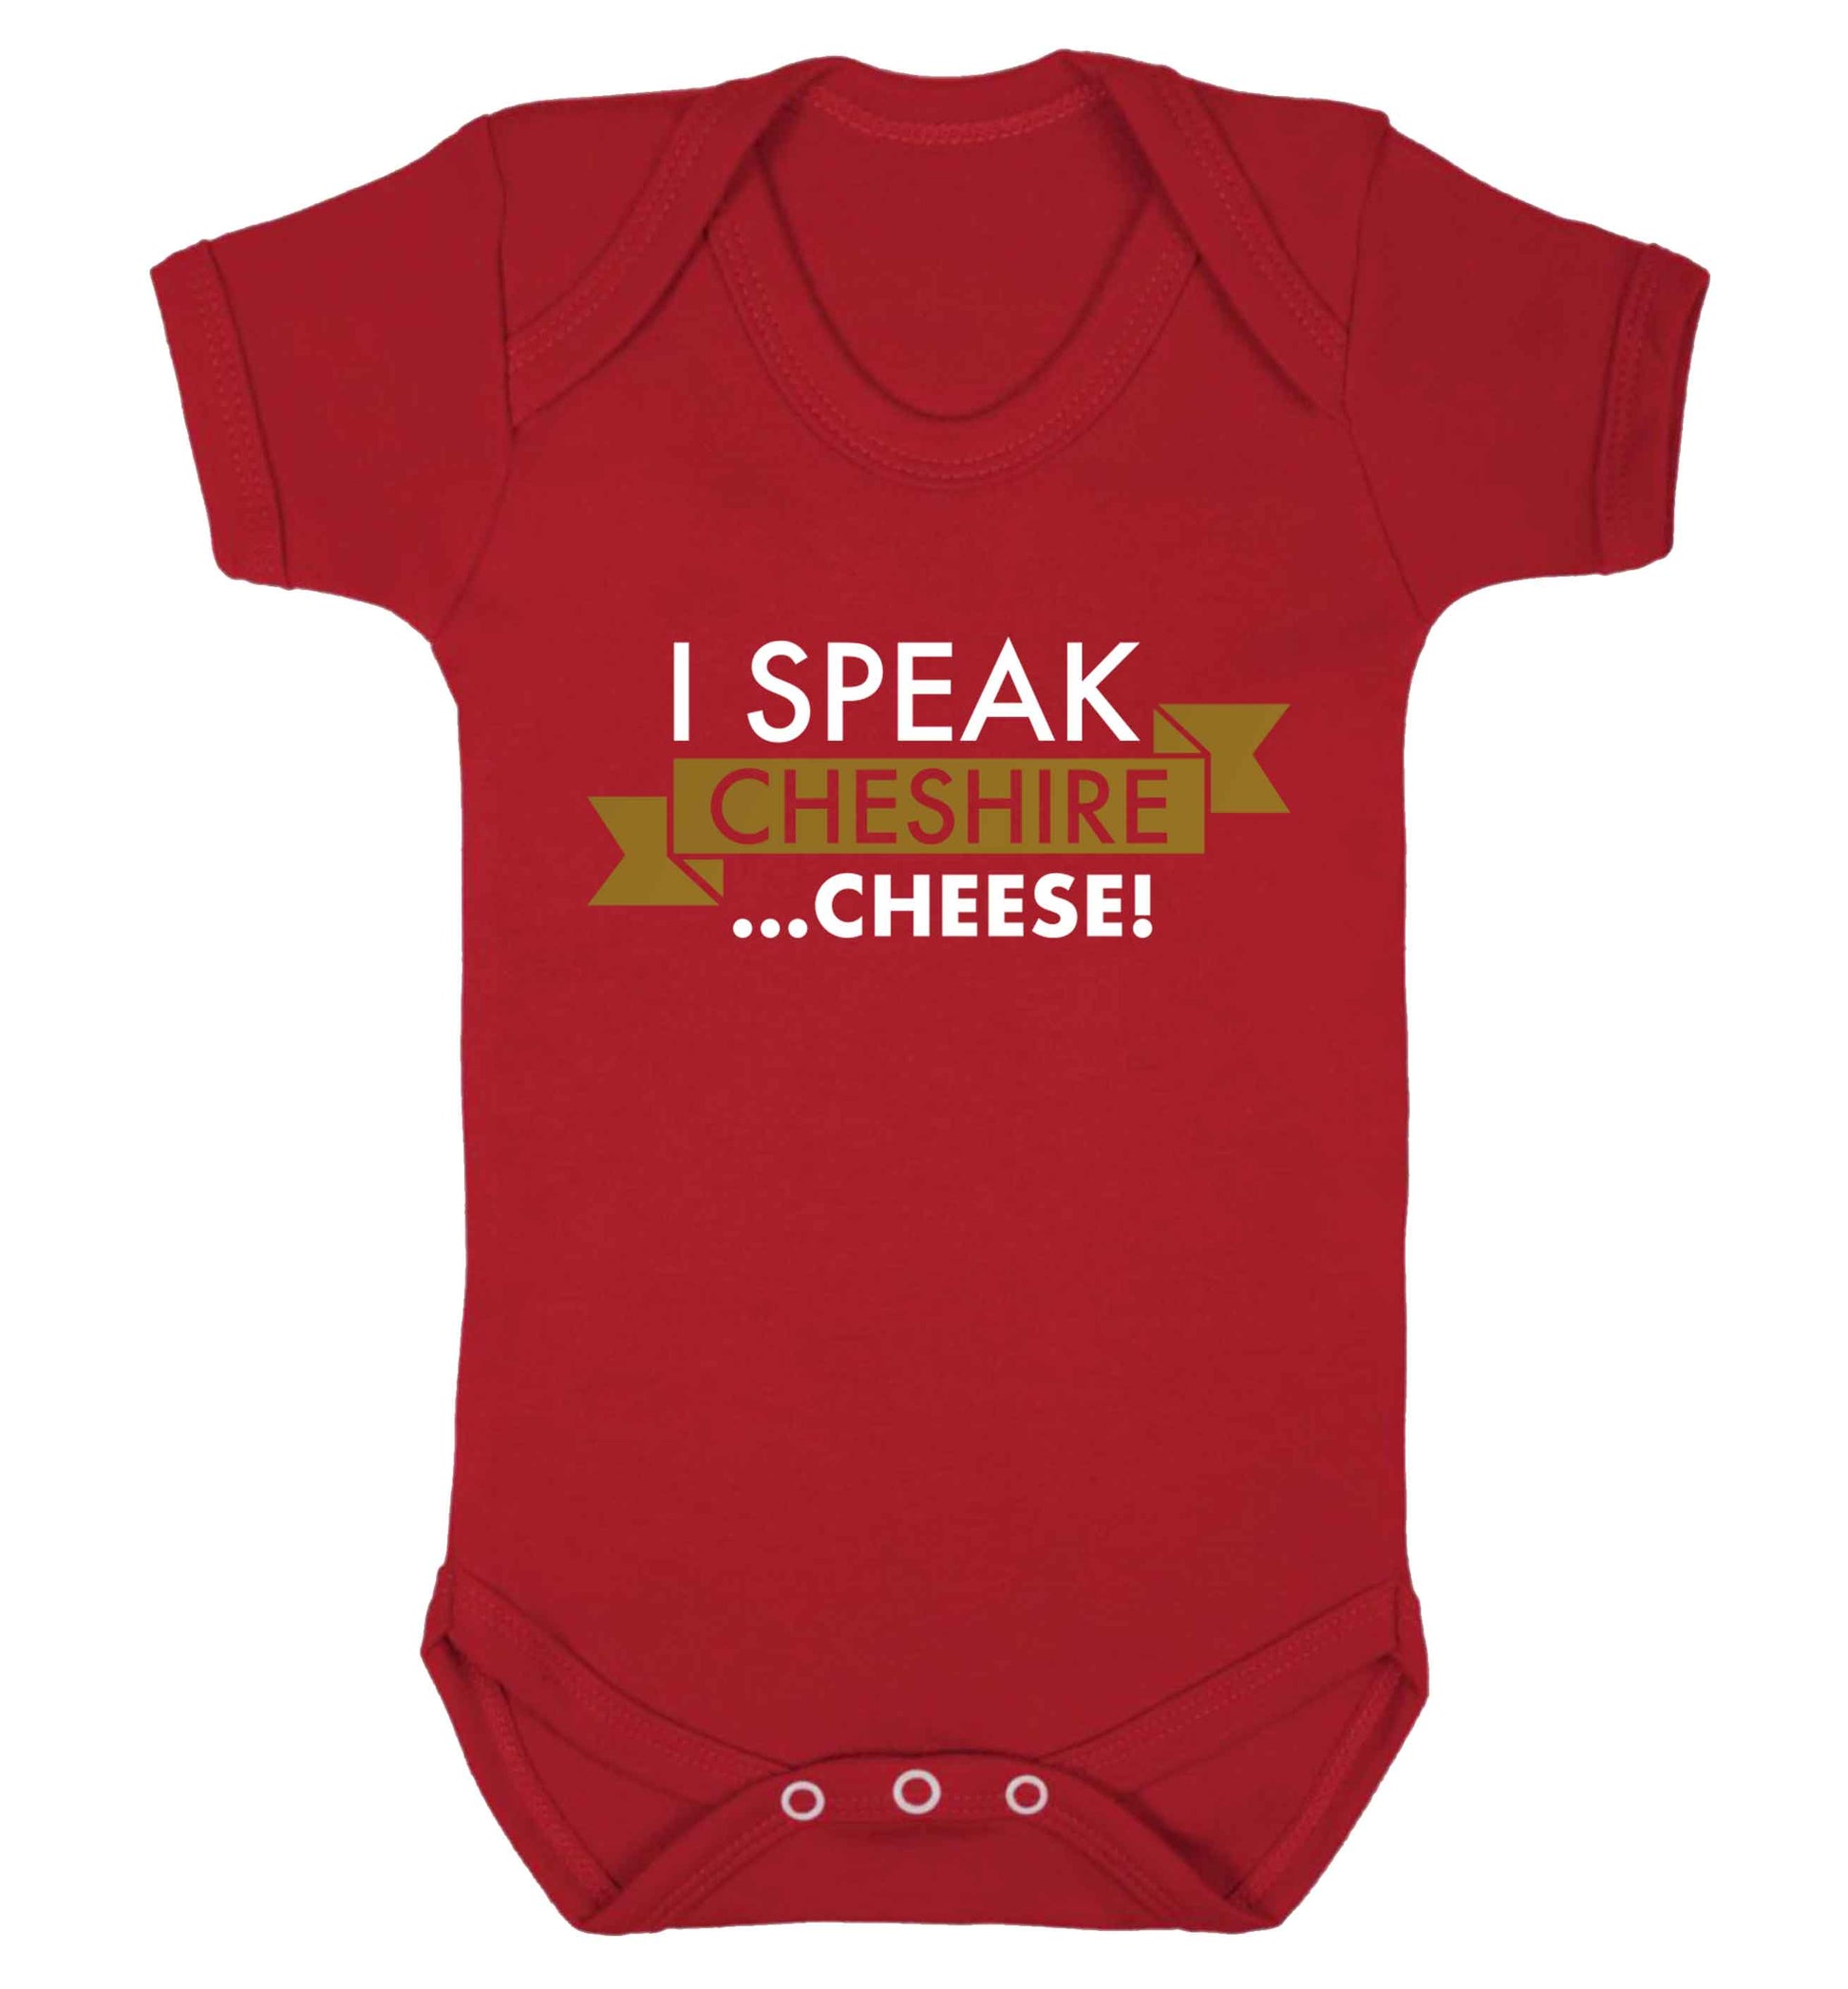 I speak Cheshire cheese Baby Vest red 18-24 months